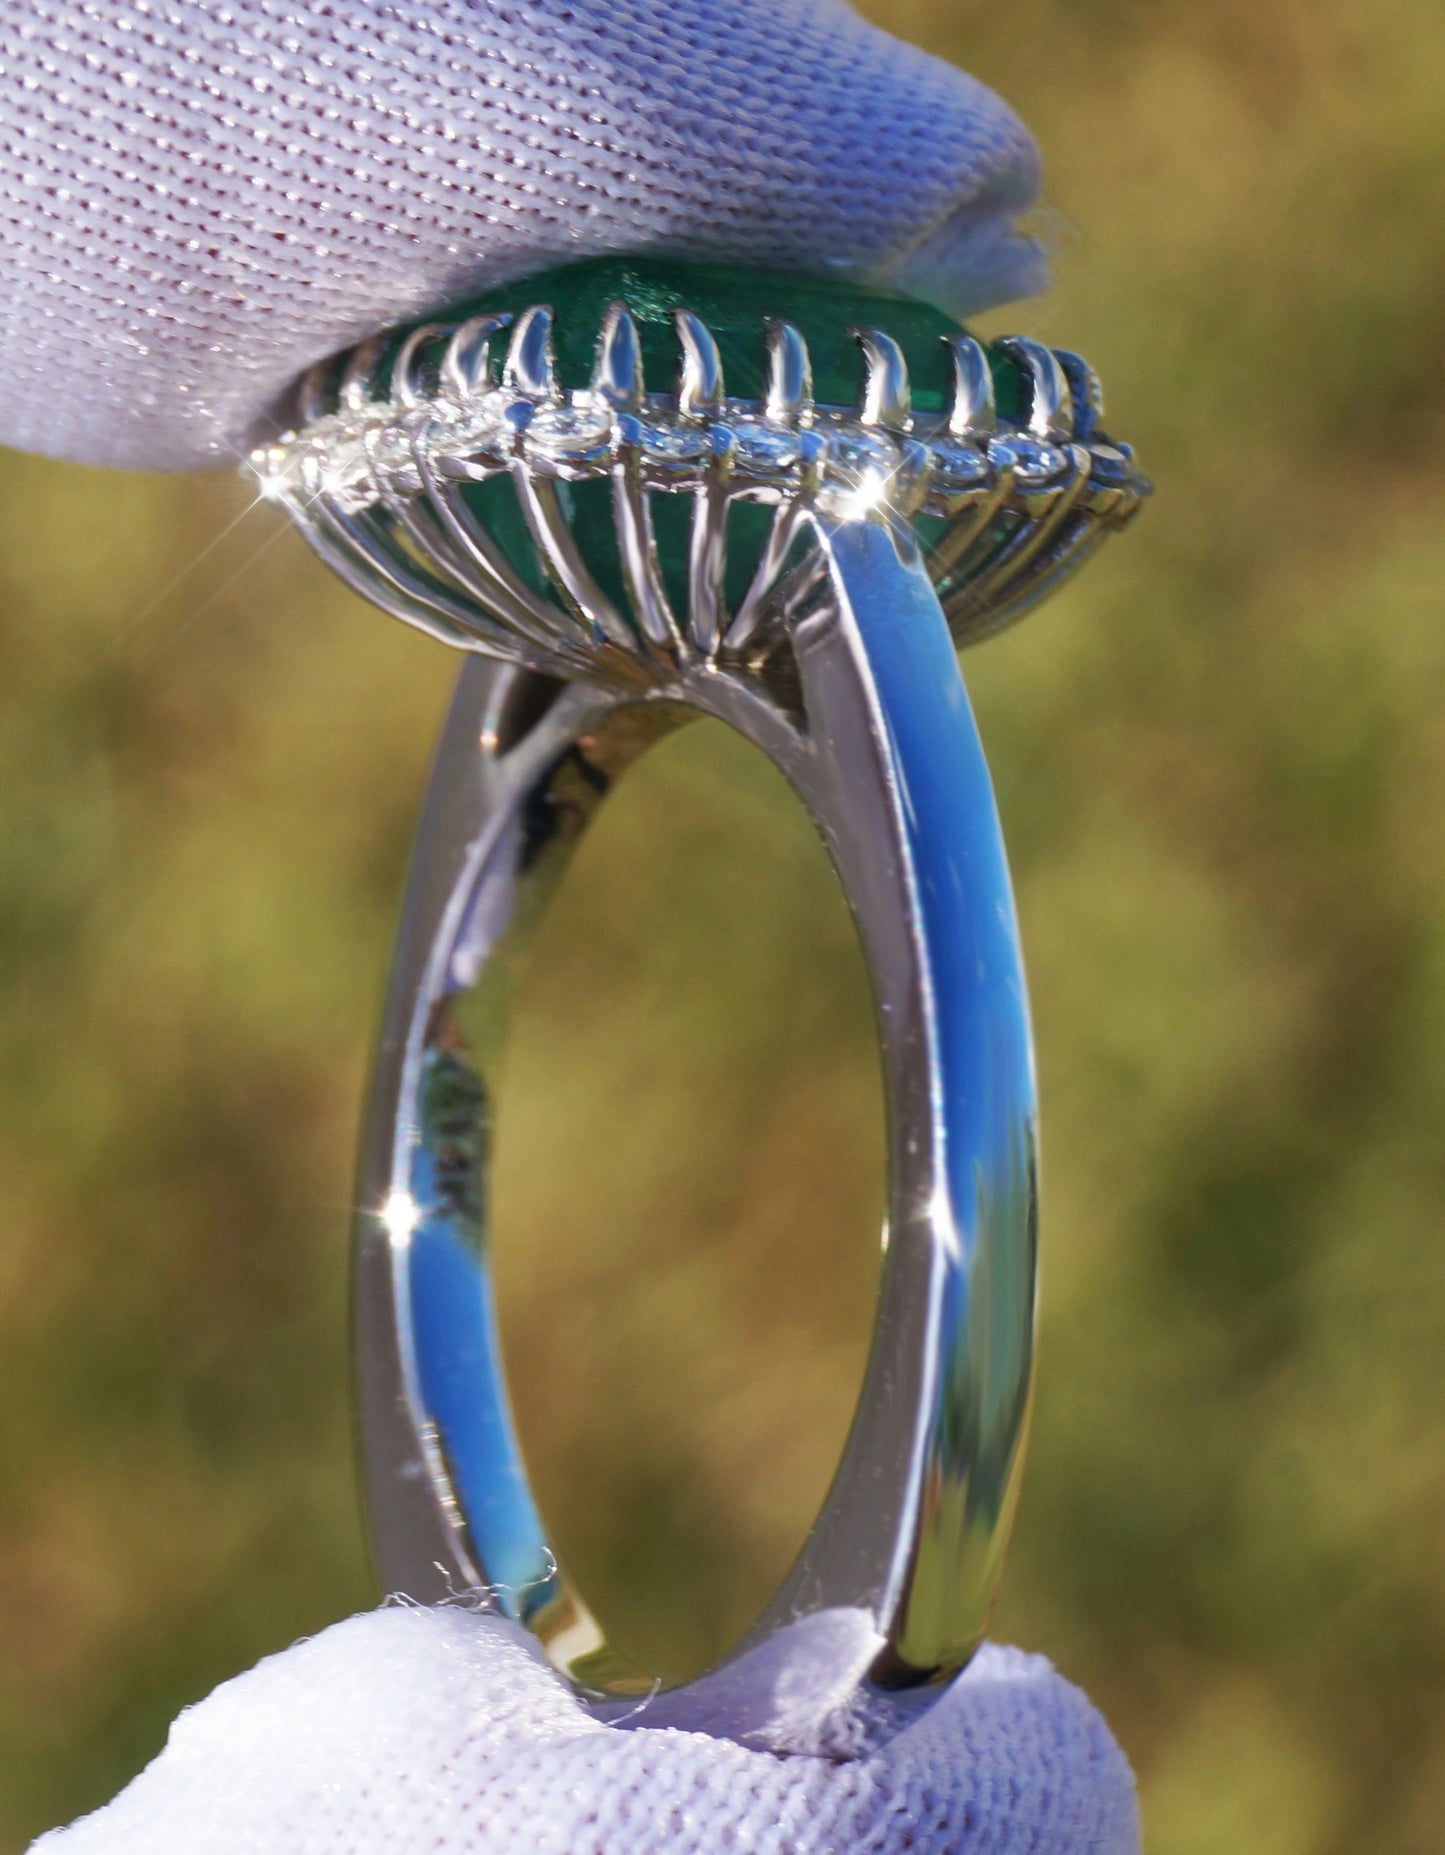 diamond Emerald ring white gold 14k green 5.54ctw gia certified